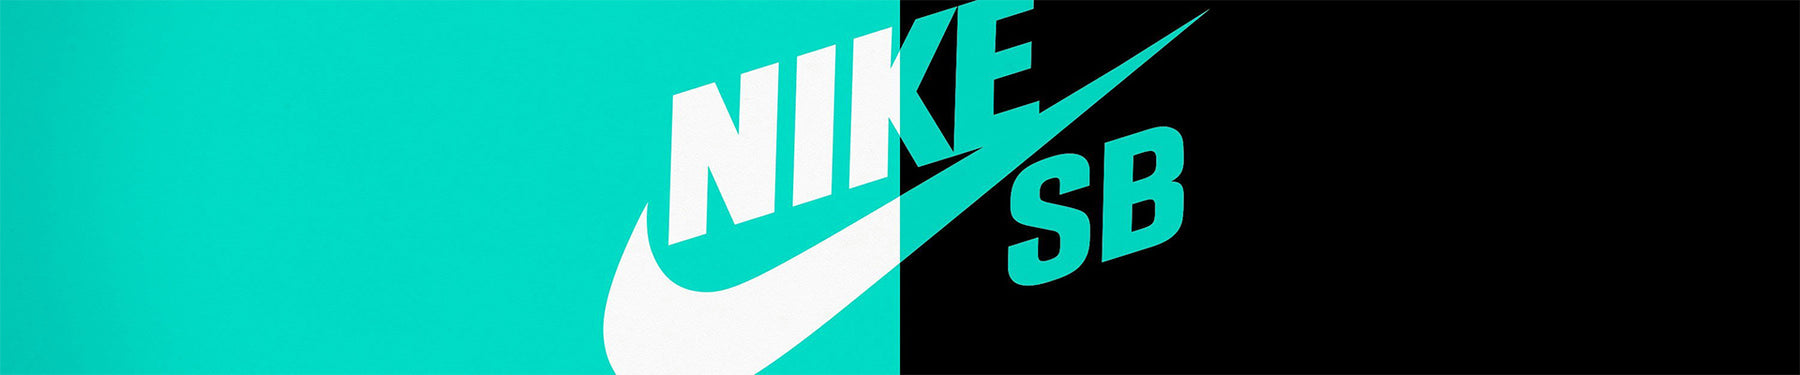 Nike SB Dunk High Pro - Soulland *Fri.day Part 02